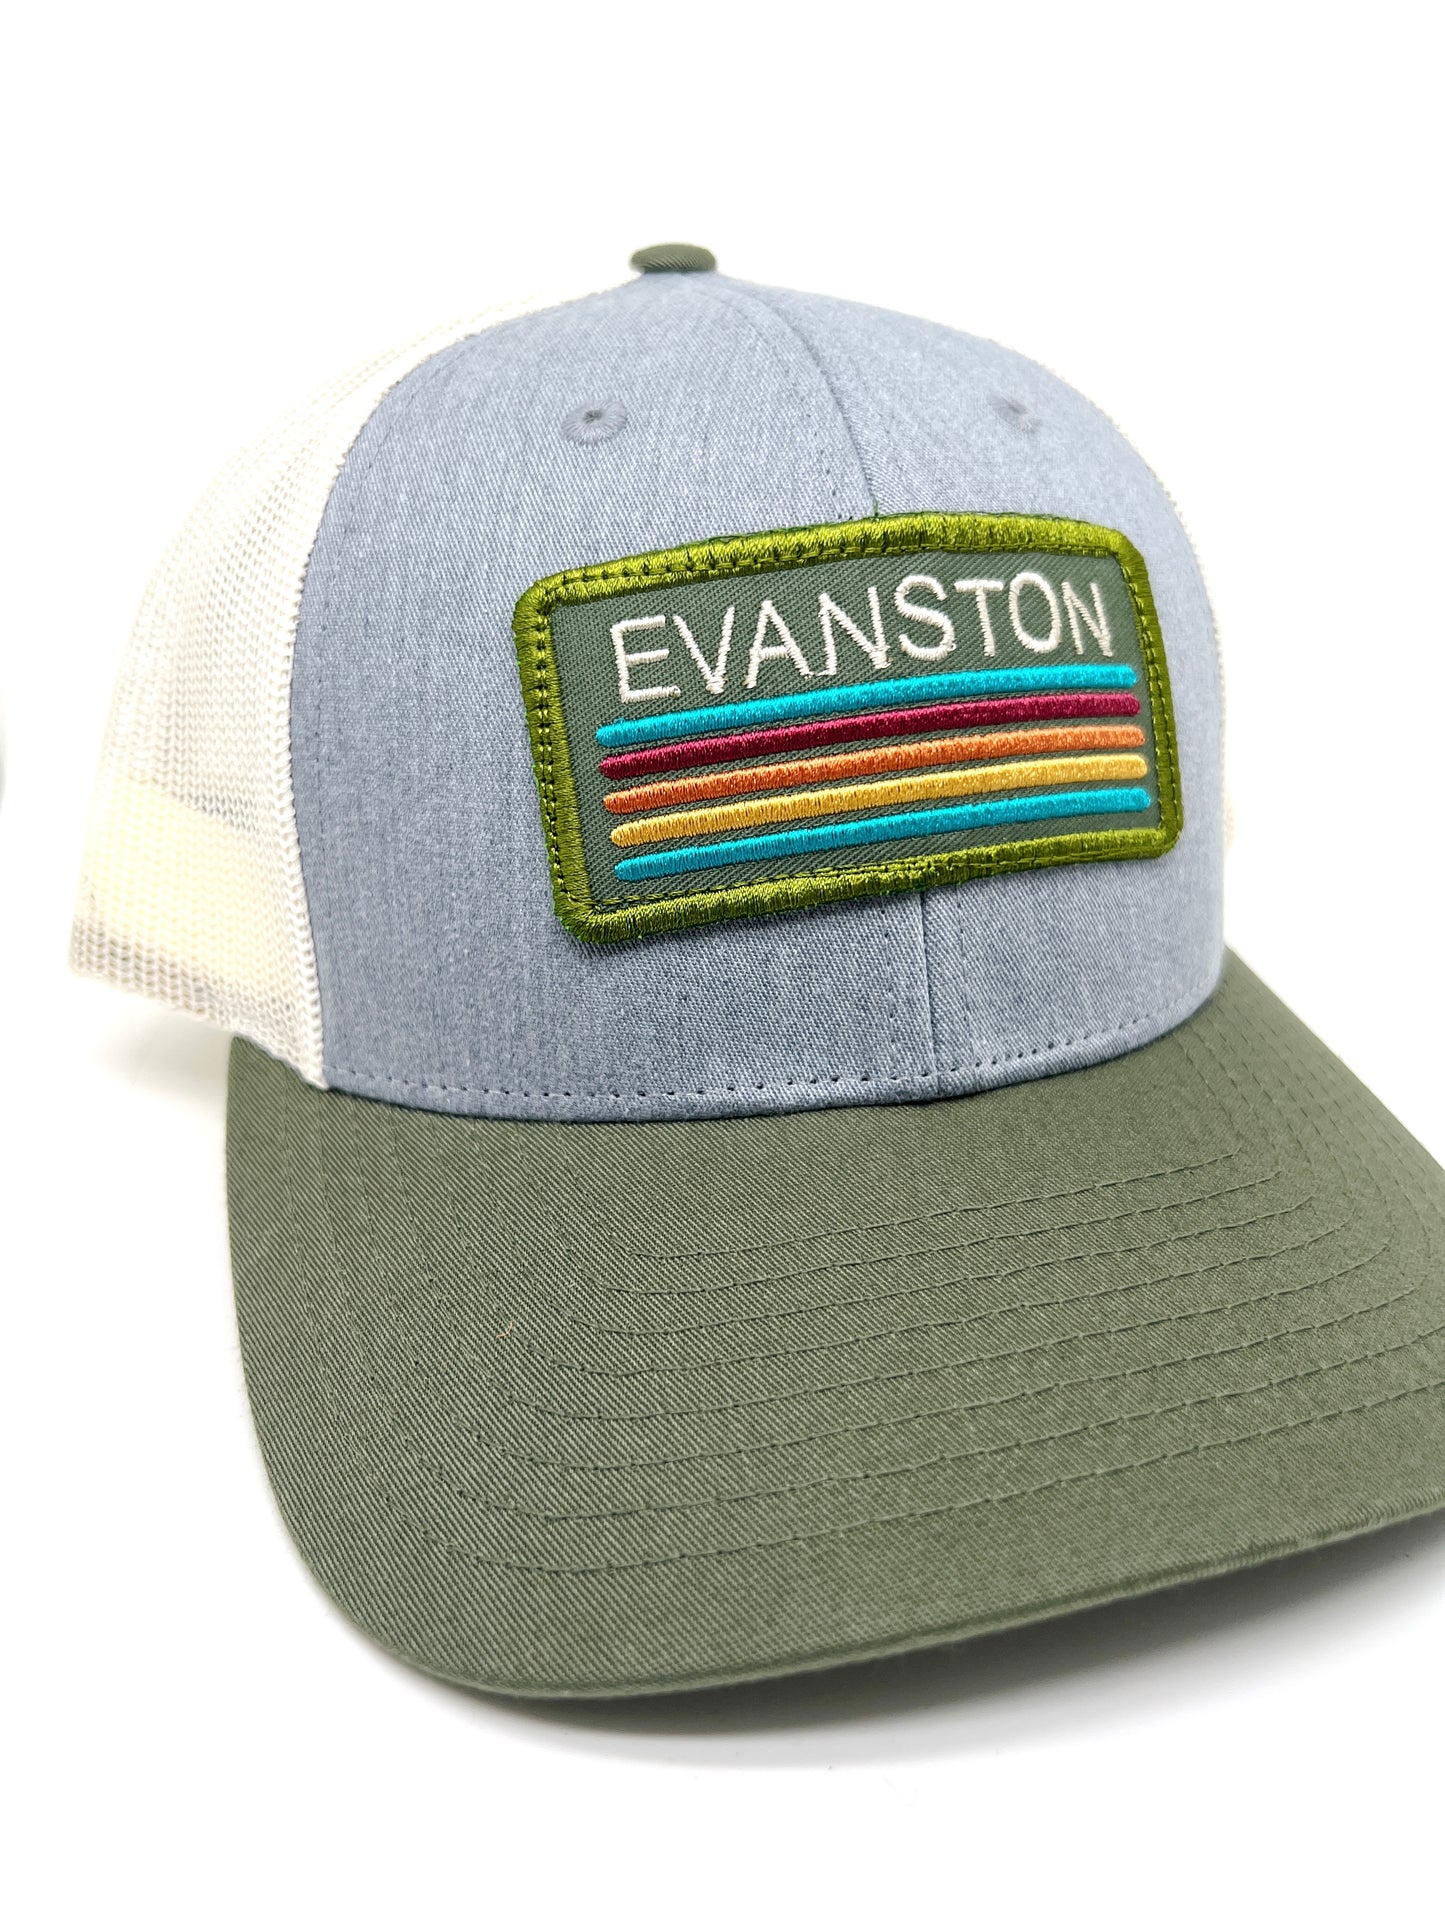 Evanston Retro Patch Baseball Hat